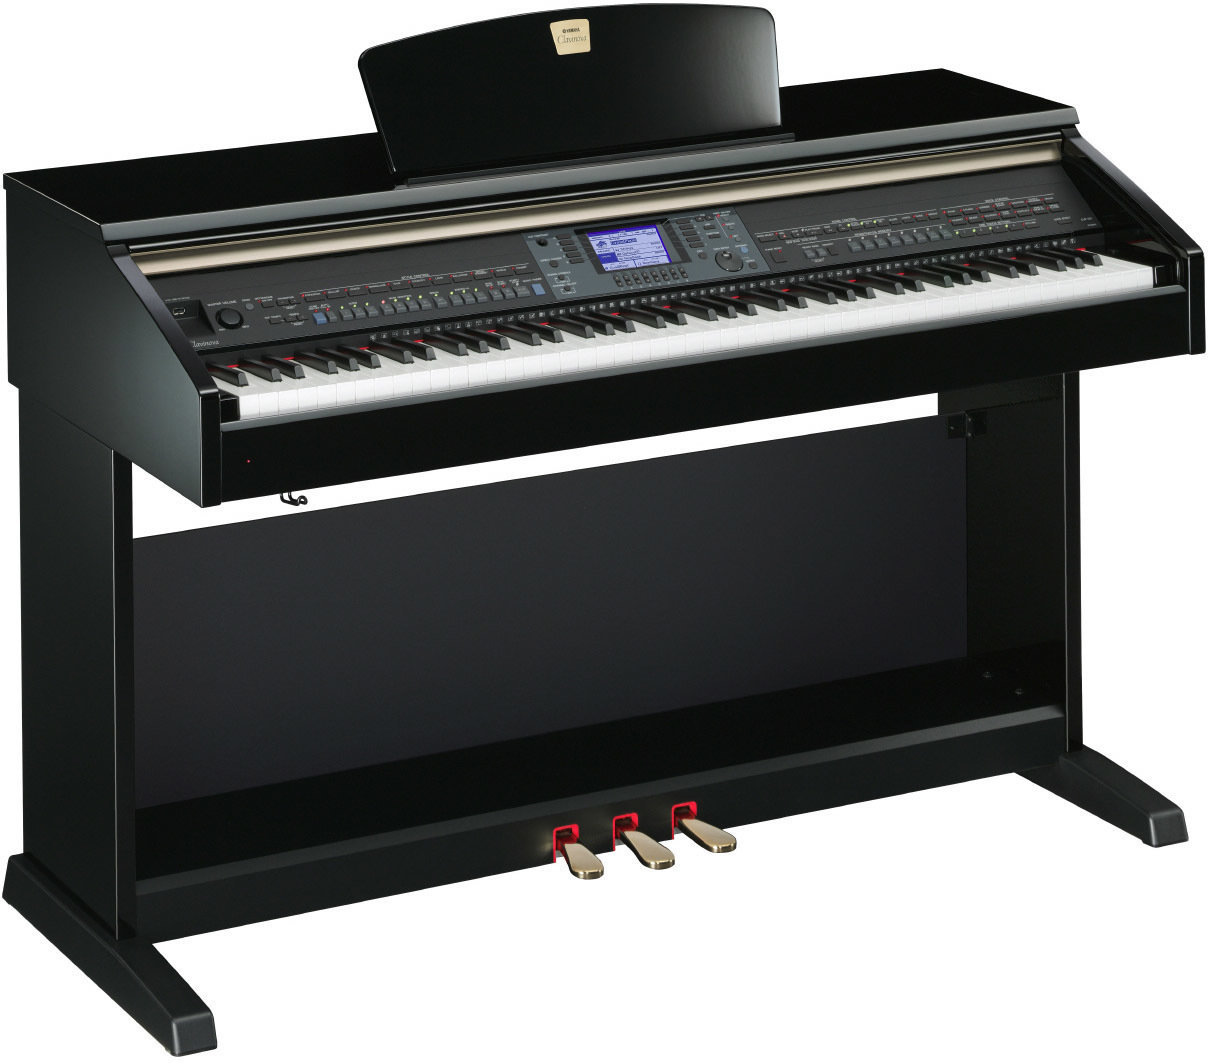 Piano digital Yamaha CVP 501